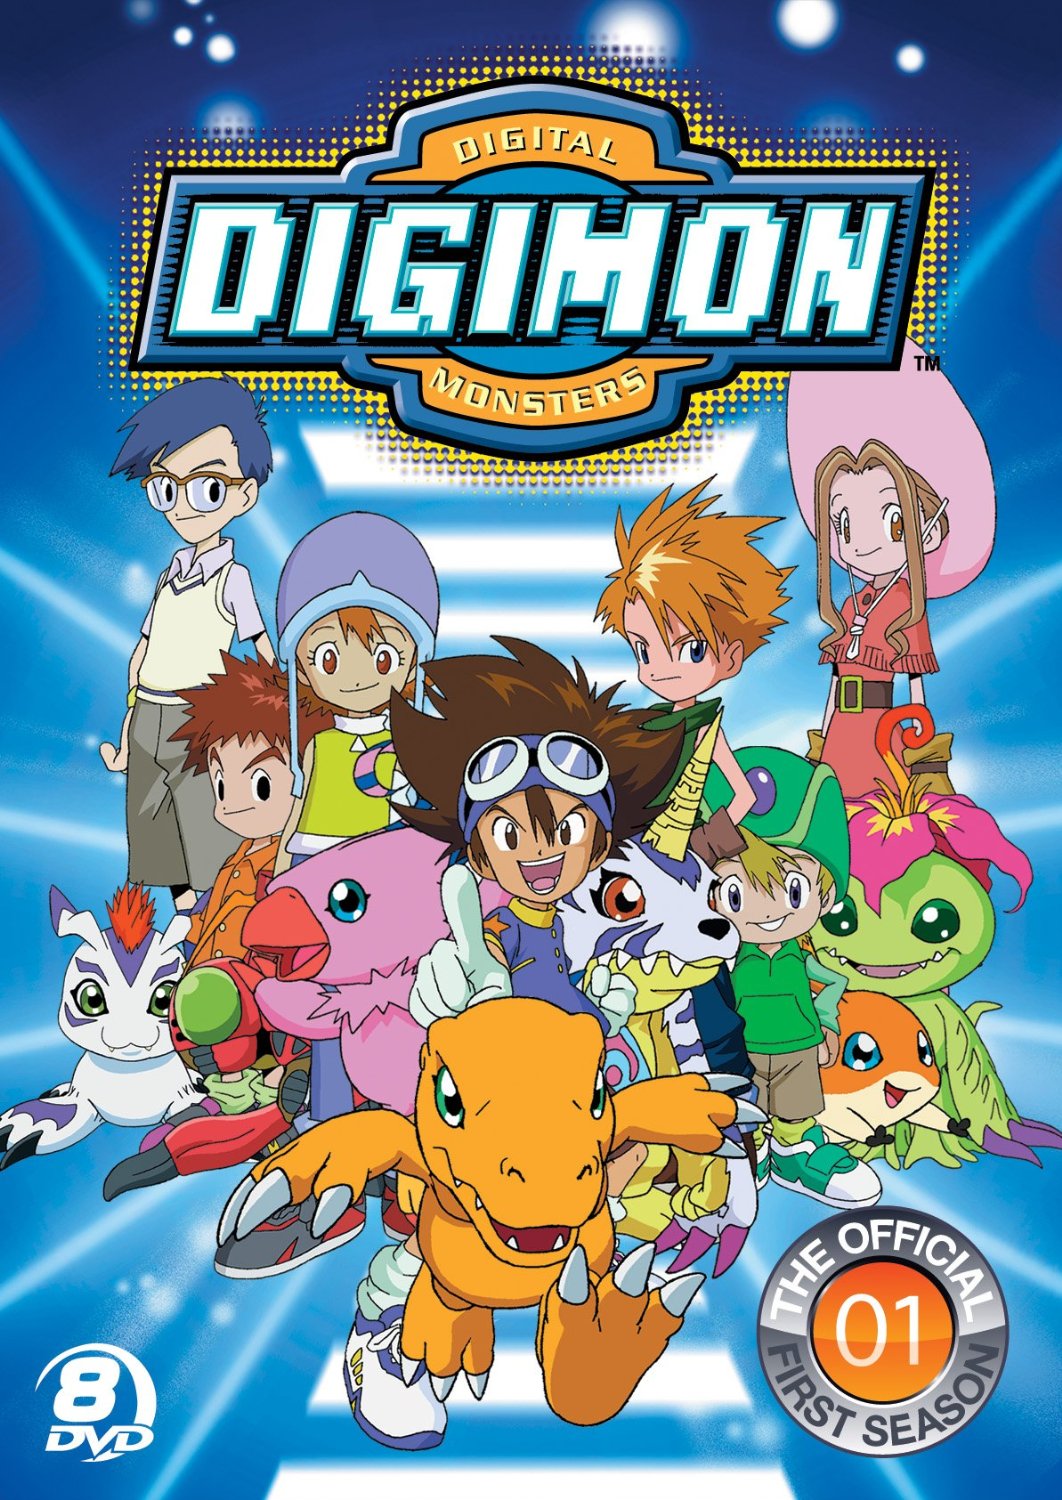 Digimon Adventure tri. Our Future's Closing Theme Unveiled